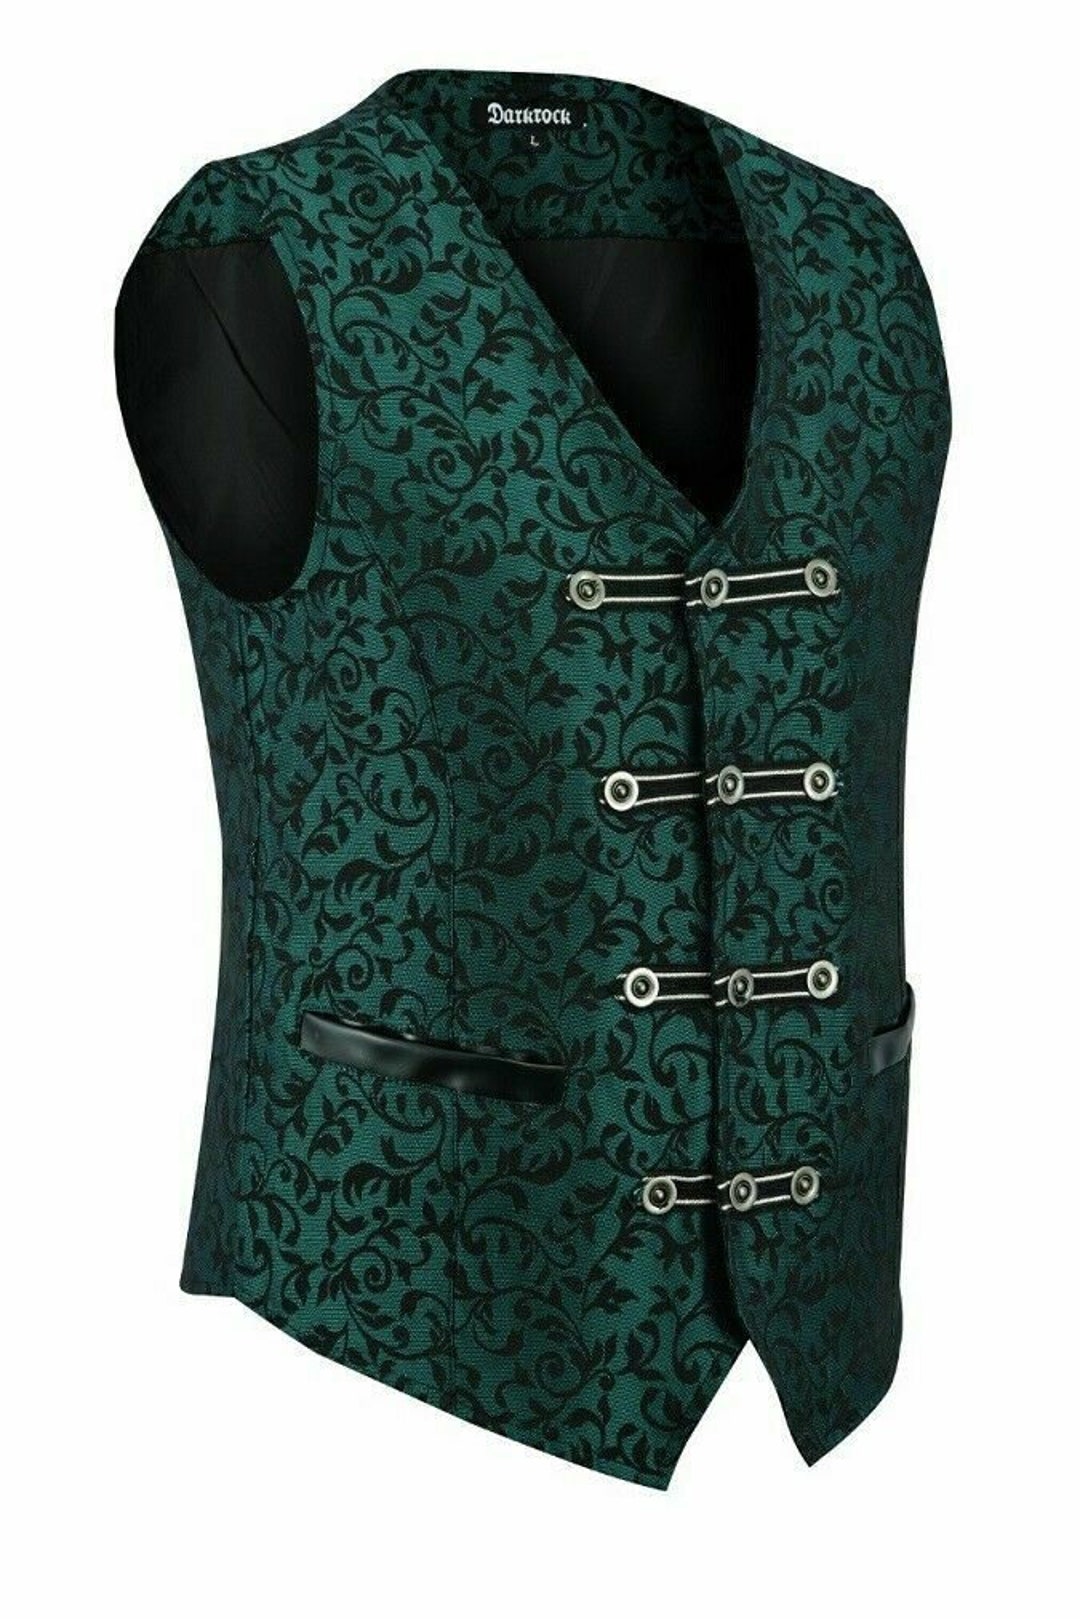 Premium Quality Tailored Men's Green Vest Waistcoat Damask - Etsy